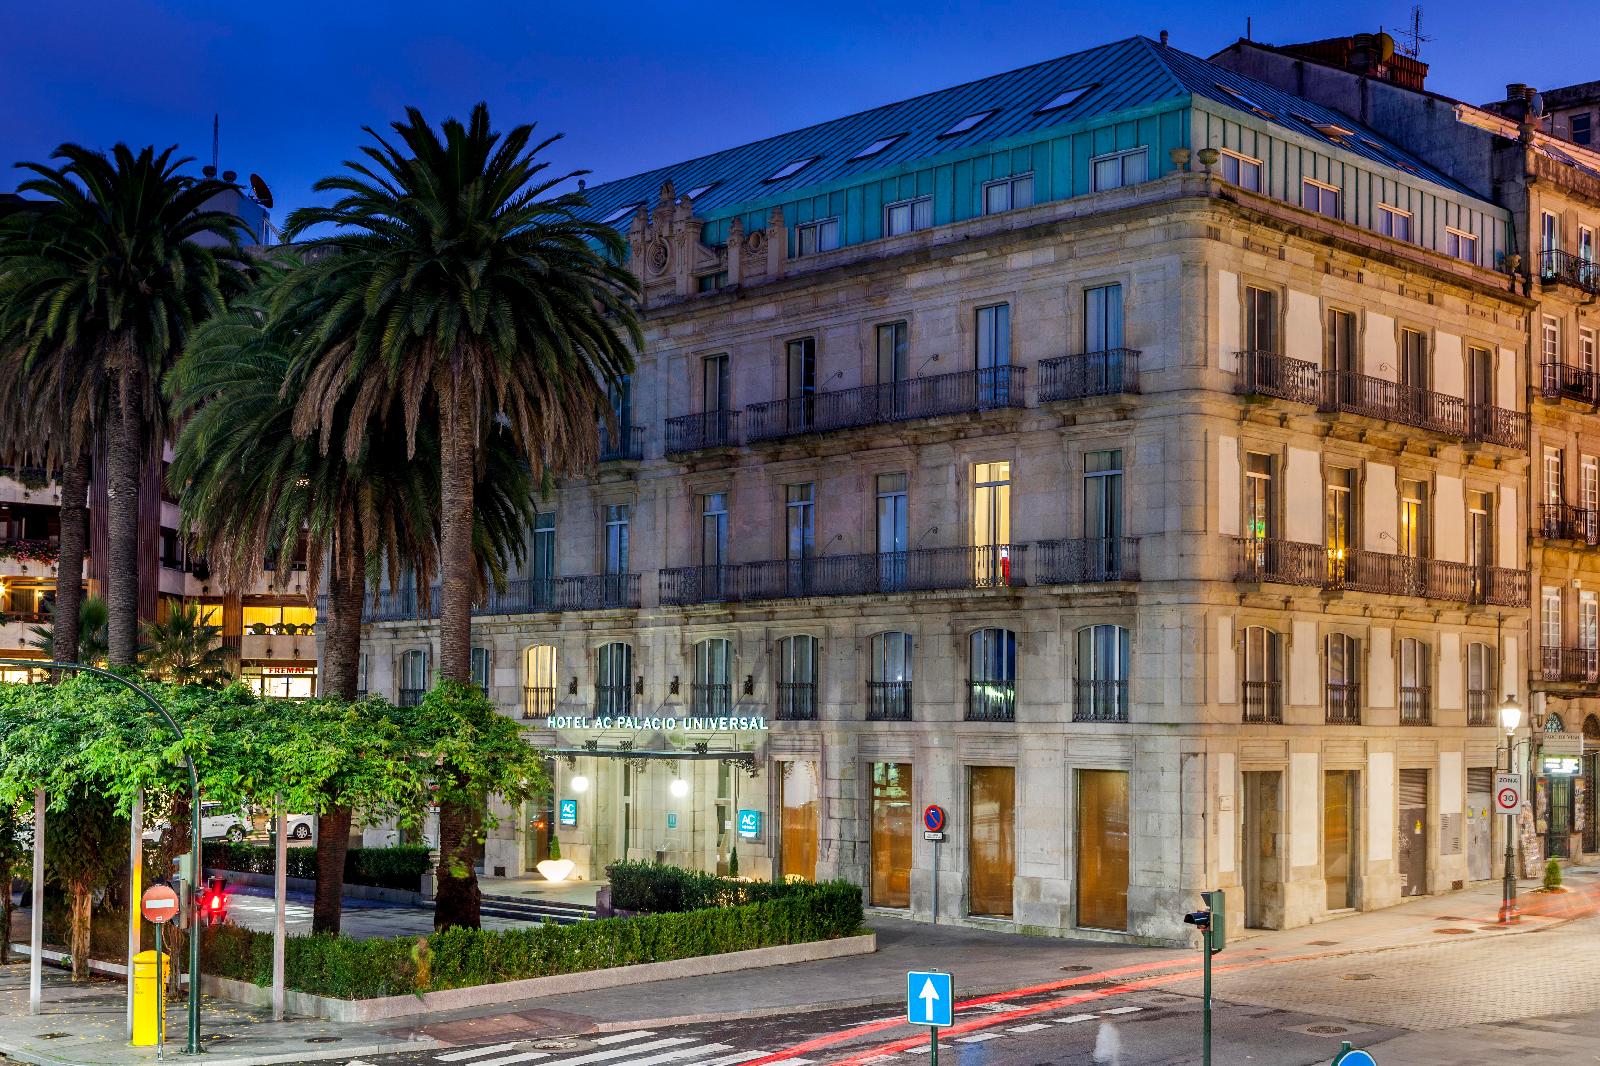 30. Ac Hotel Palacio Universal By Marriott